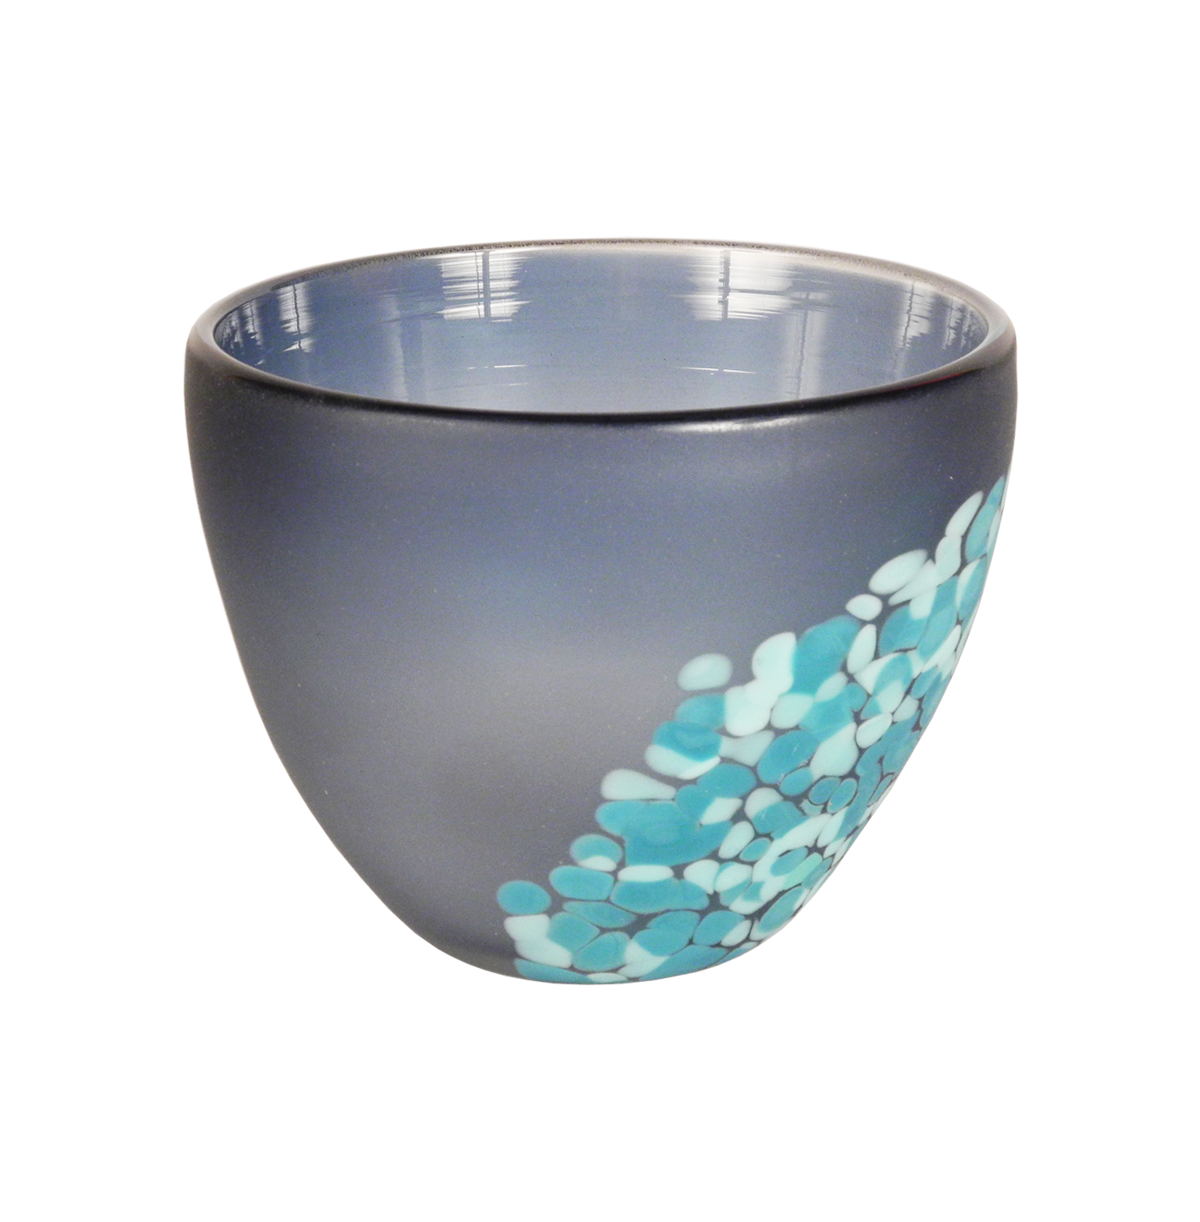 Neutral Flava Bowls - Glass Art - Kingston Glass Studio - Blown Glass - Glass Blowing